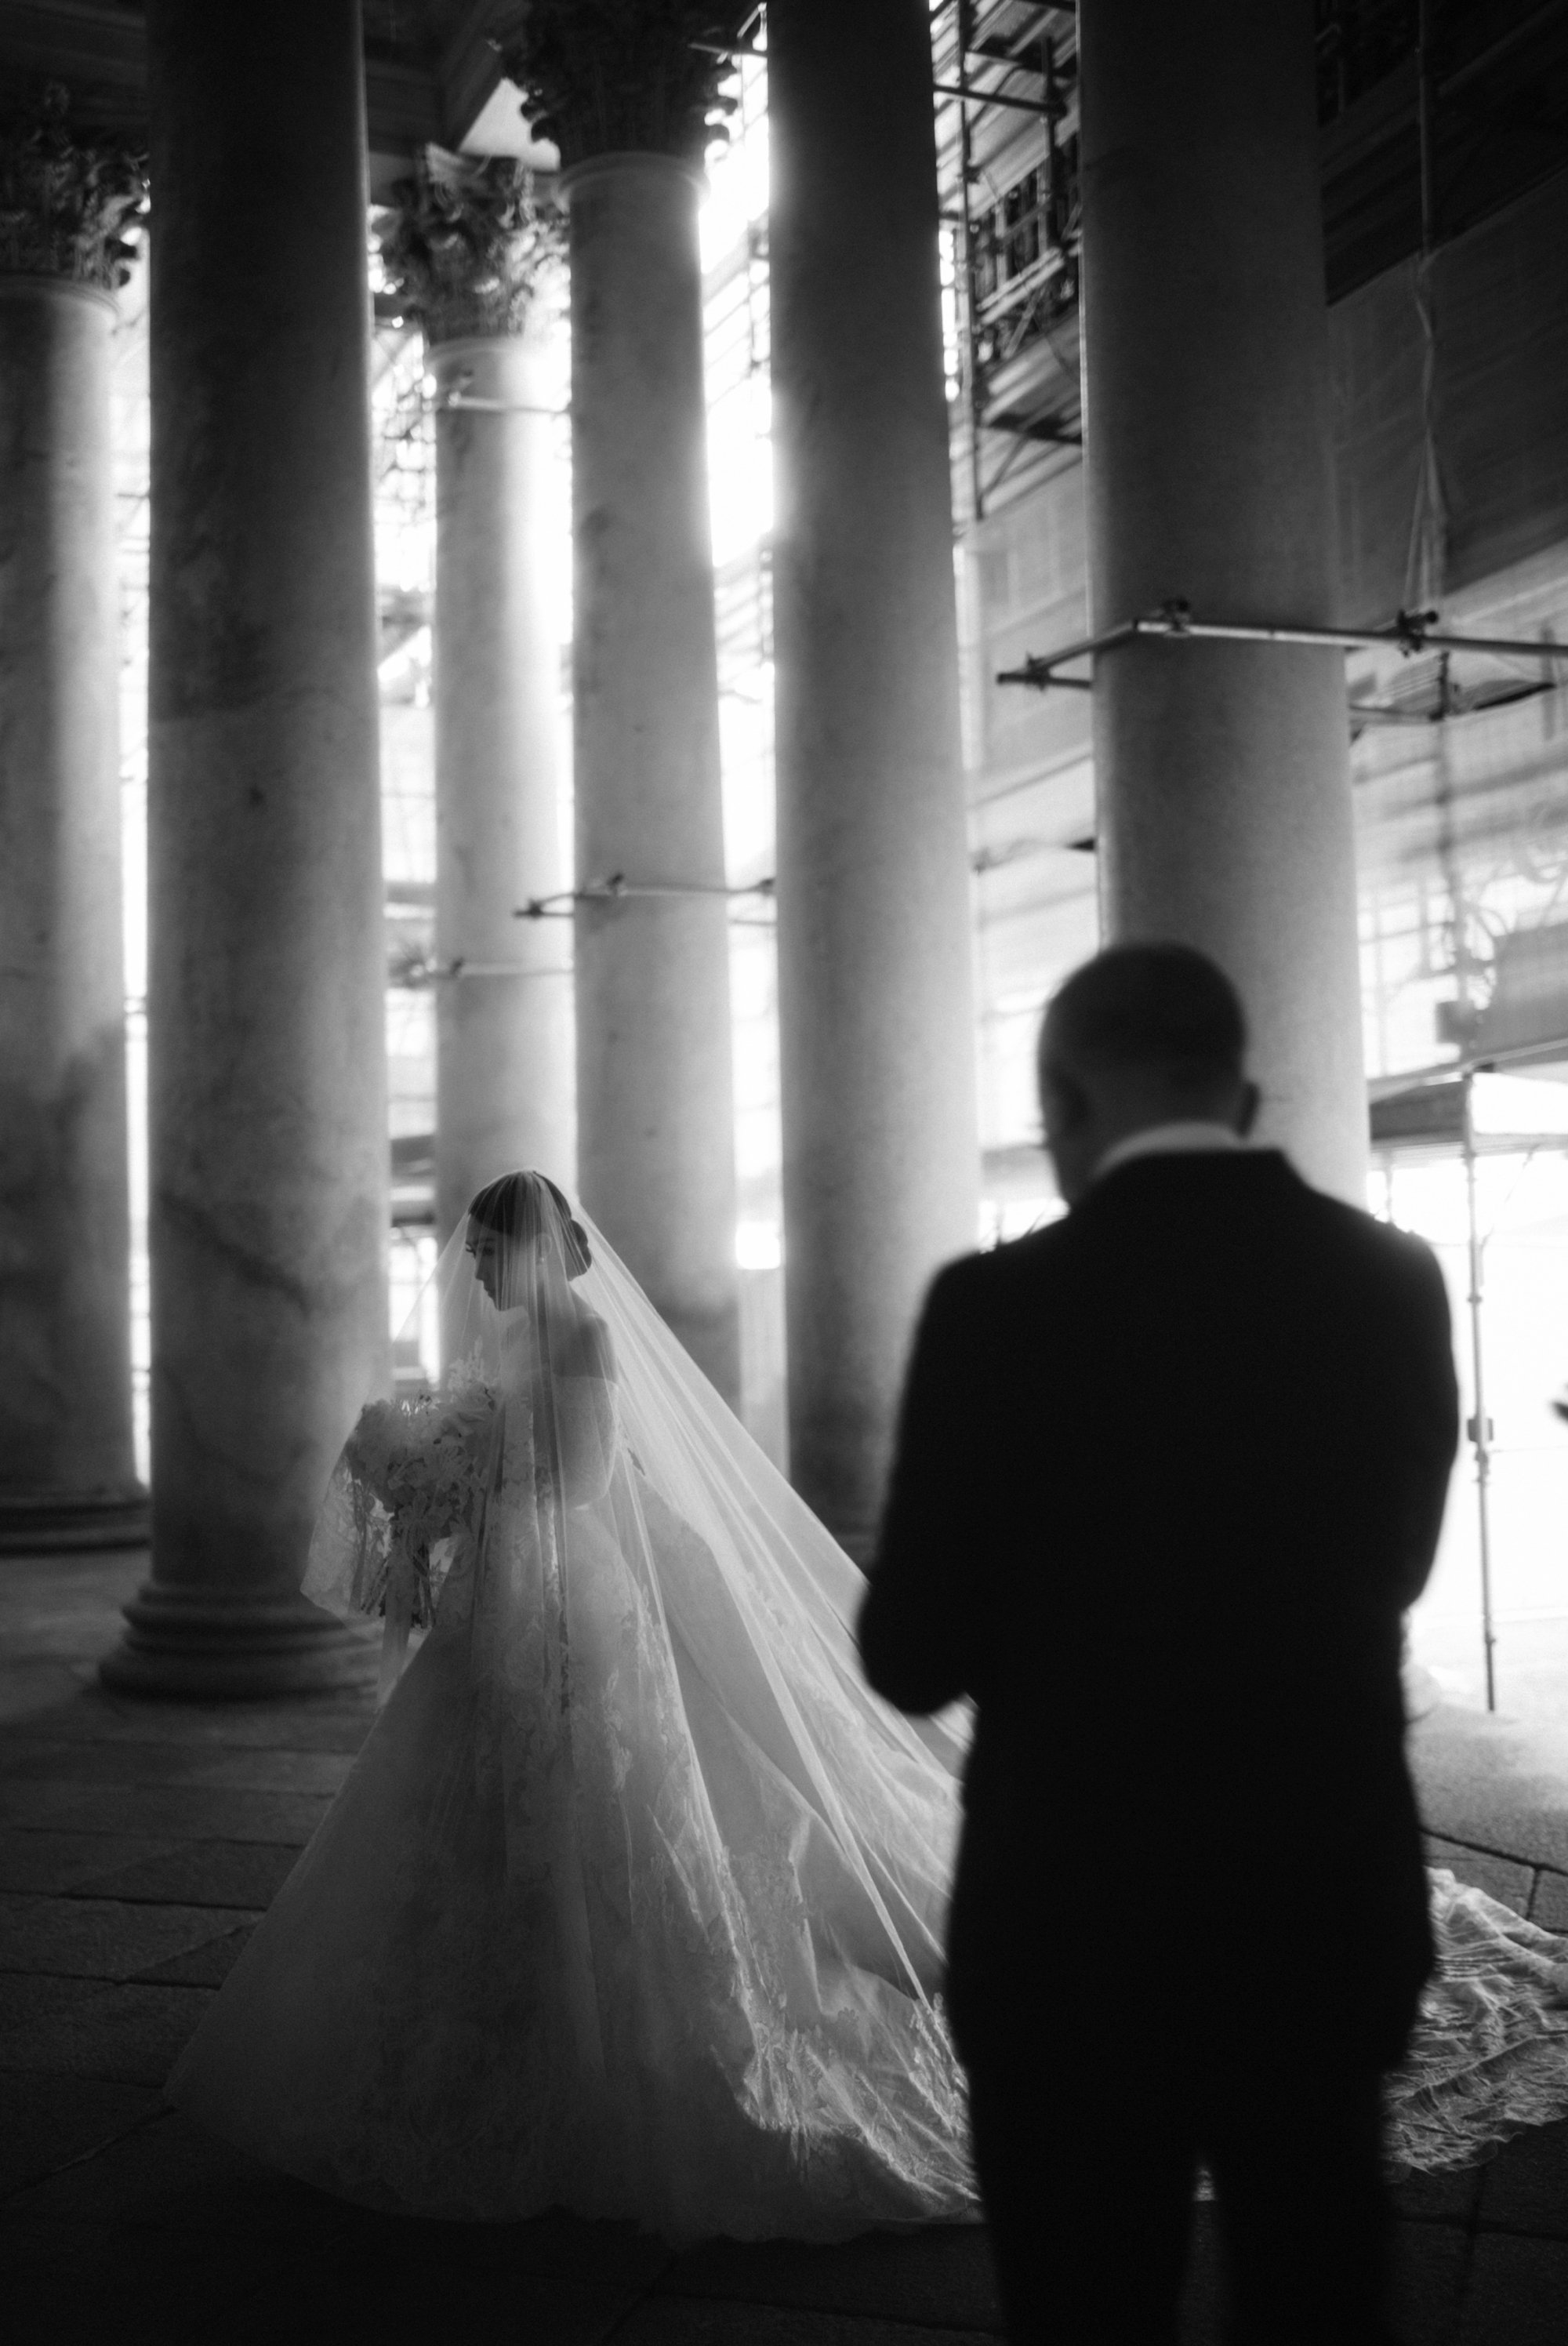 Prawira-Evelyn-Dolomites-Italy-Santre wedding-Yefta Gunawan-Jeriko MUA-Carol Kuntjoro Photography-46.jpg